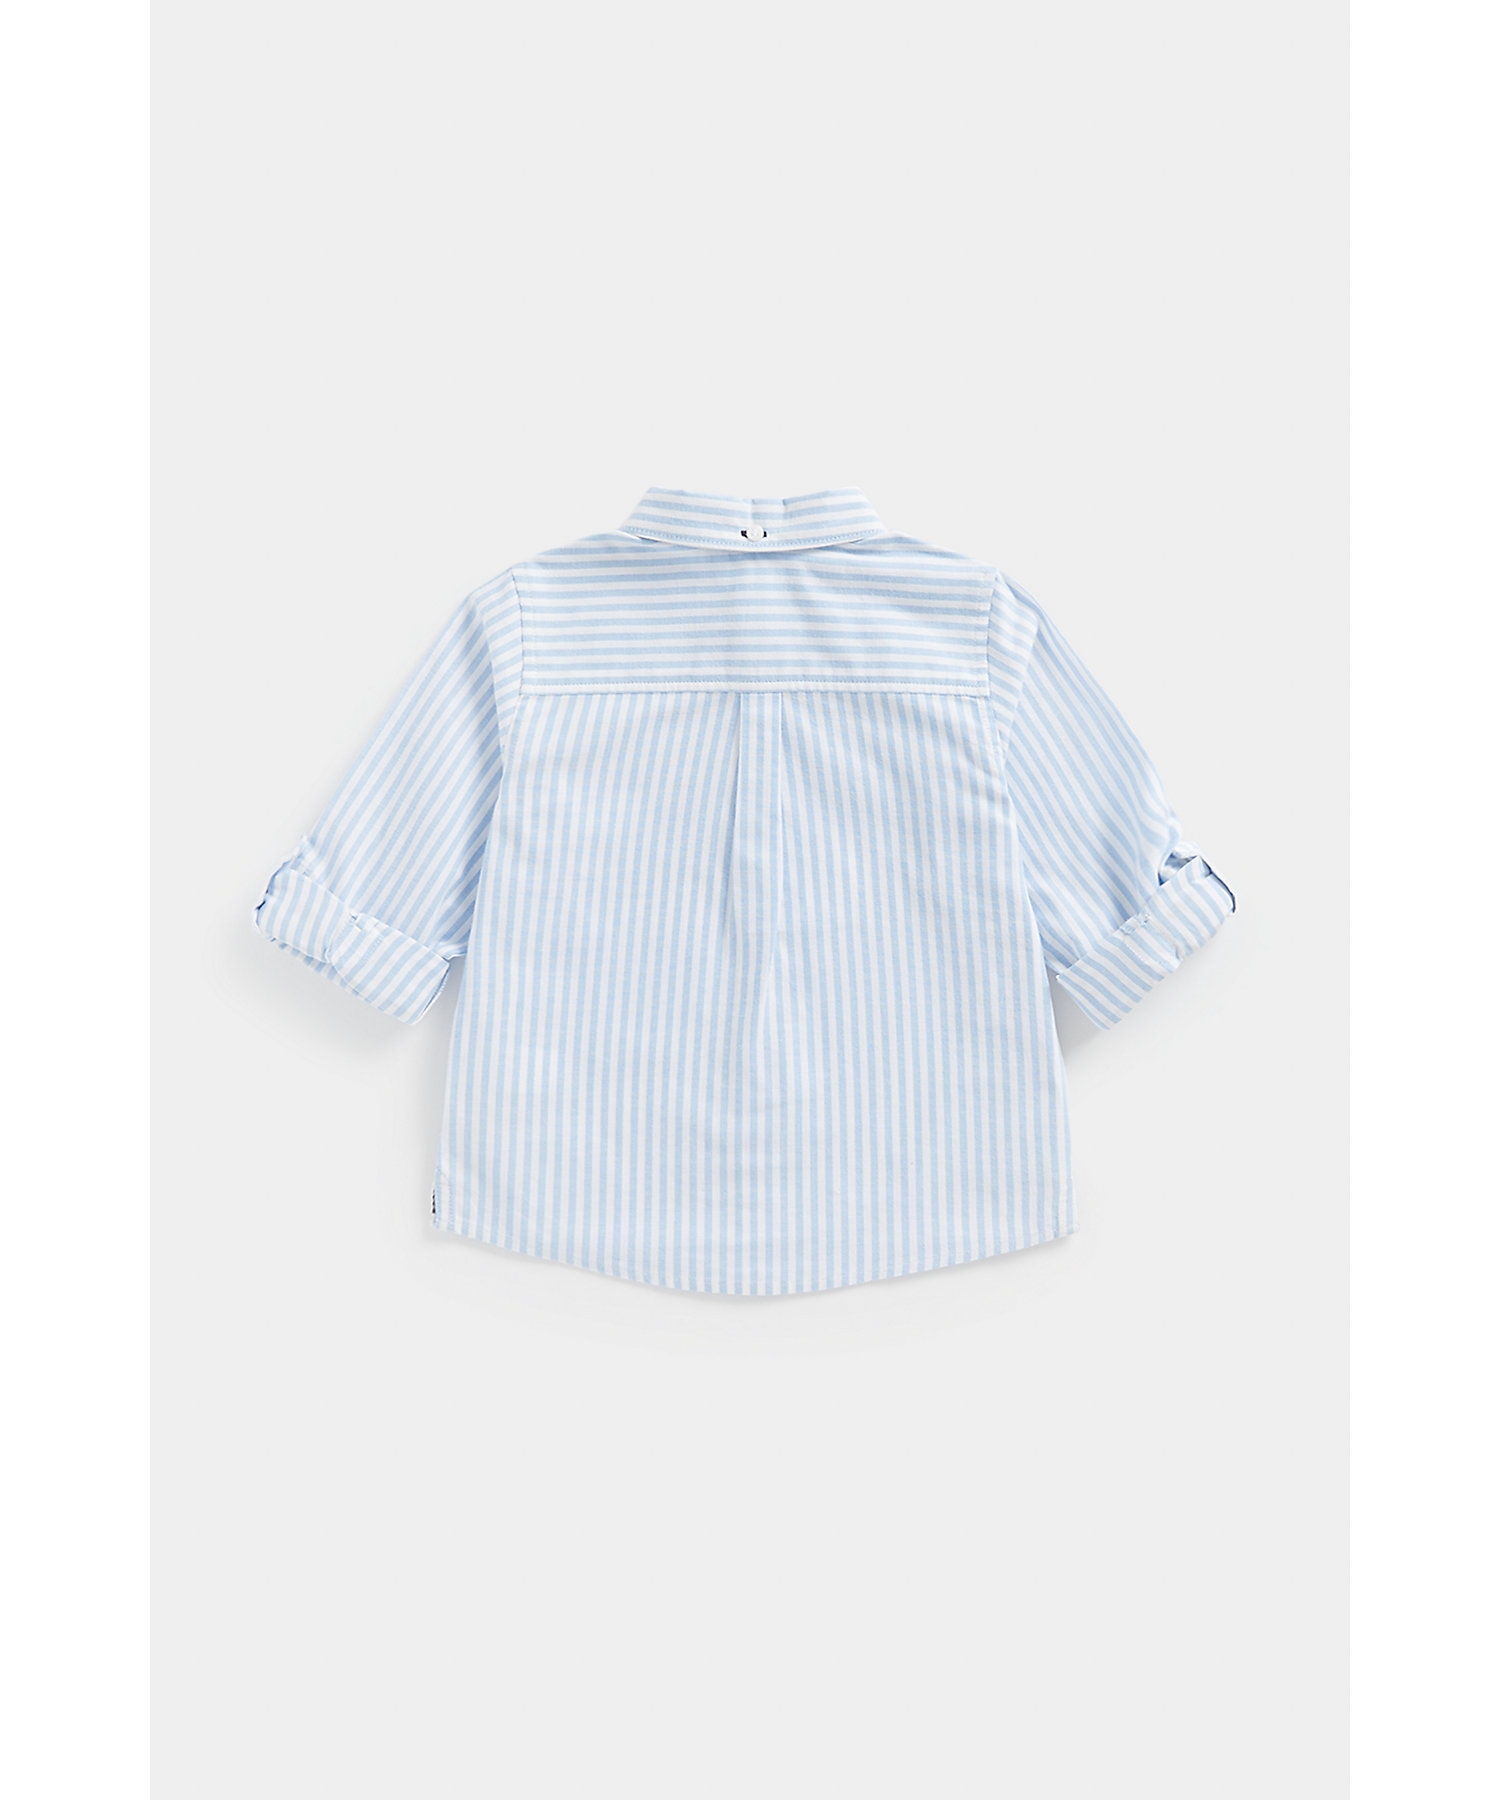 Boys Full Sleeves Shirt Striped-Blue